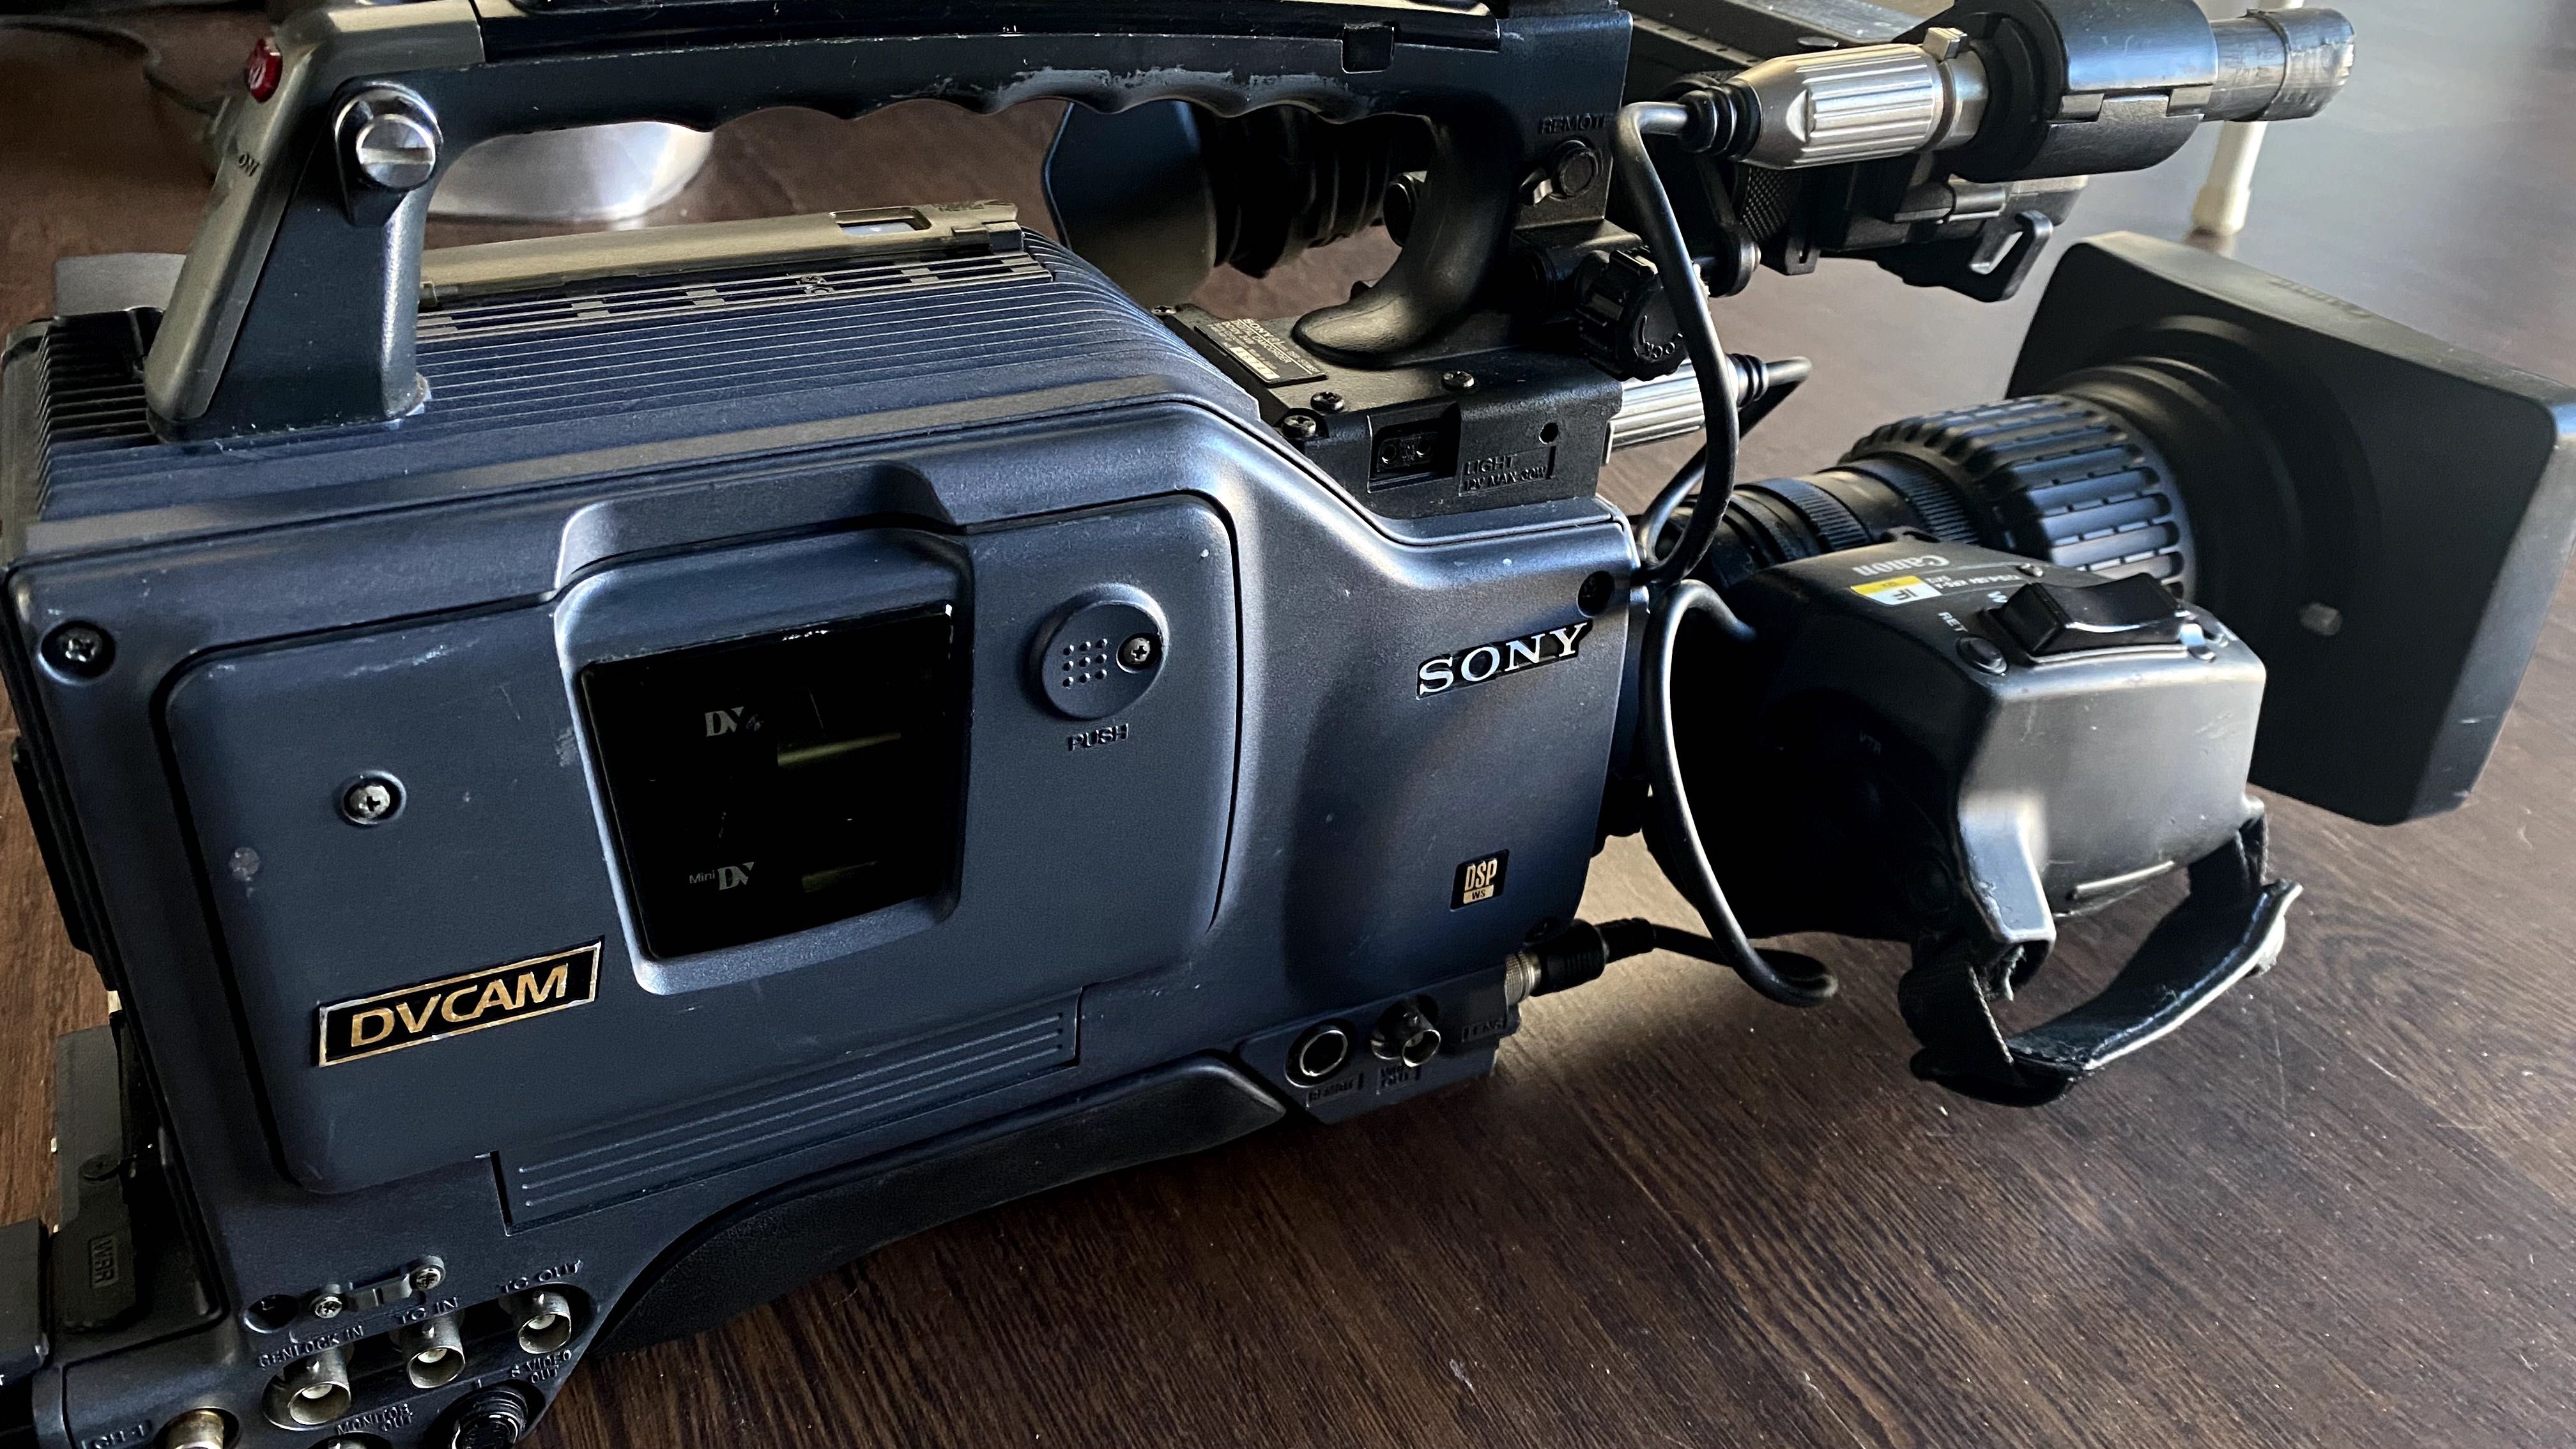 camera Sony 3 CCD DV cam DSR-570WSP + Objetiva YJ12x6.5B4